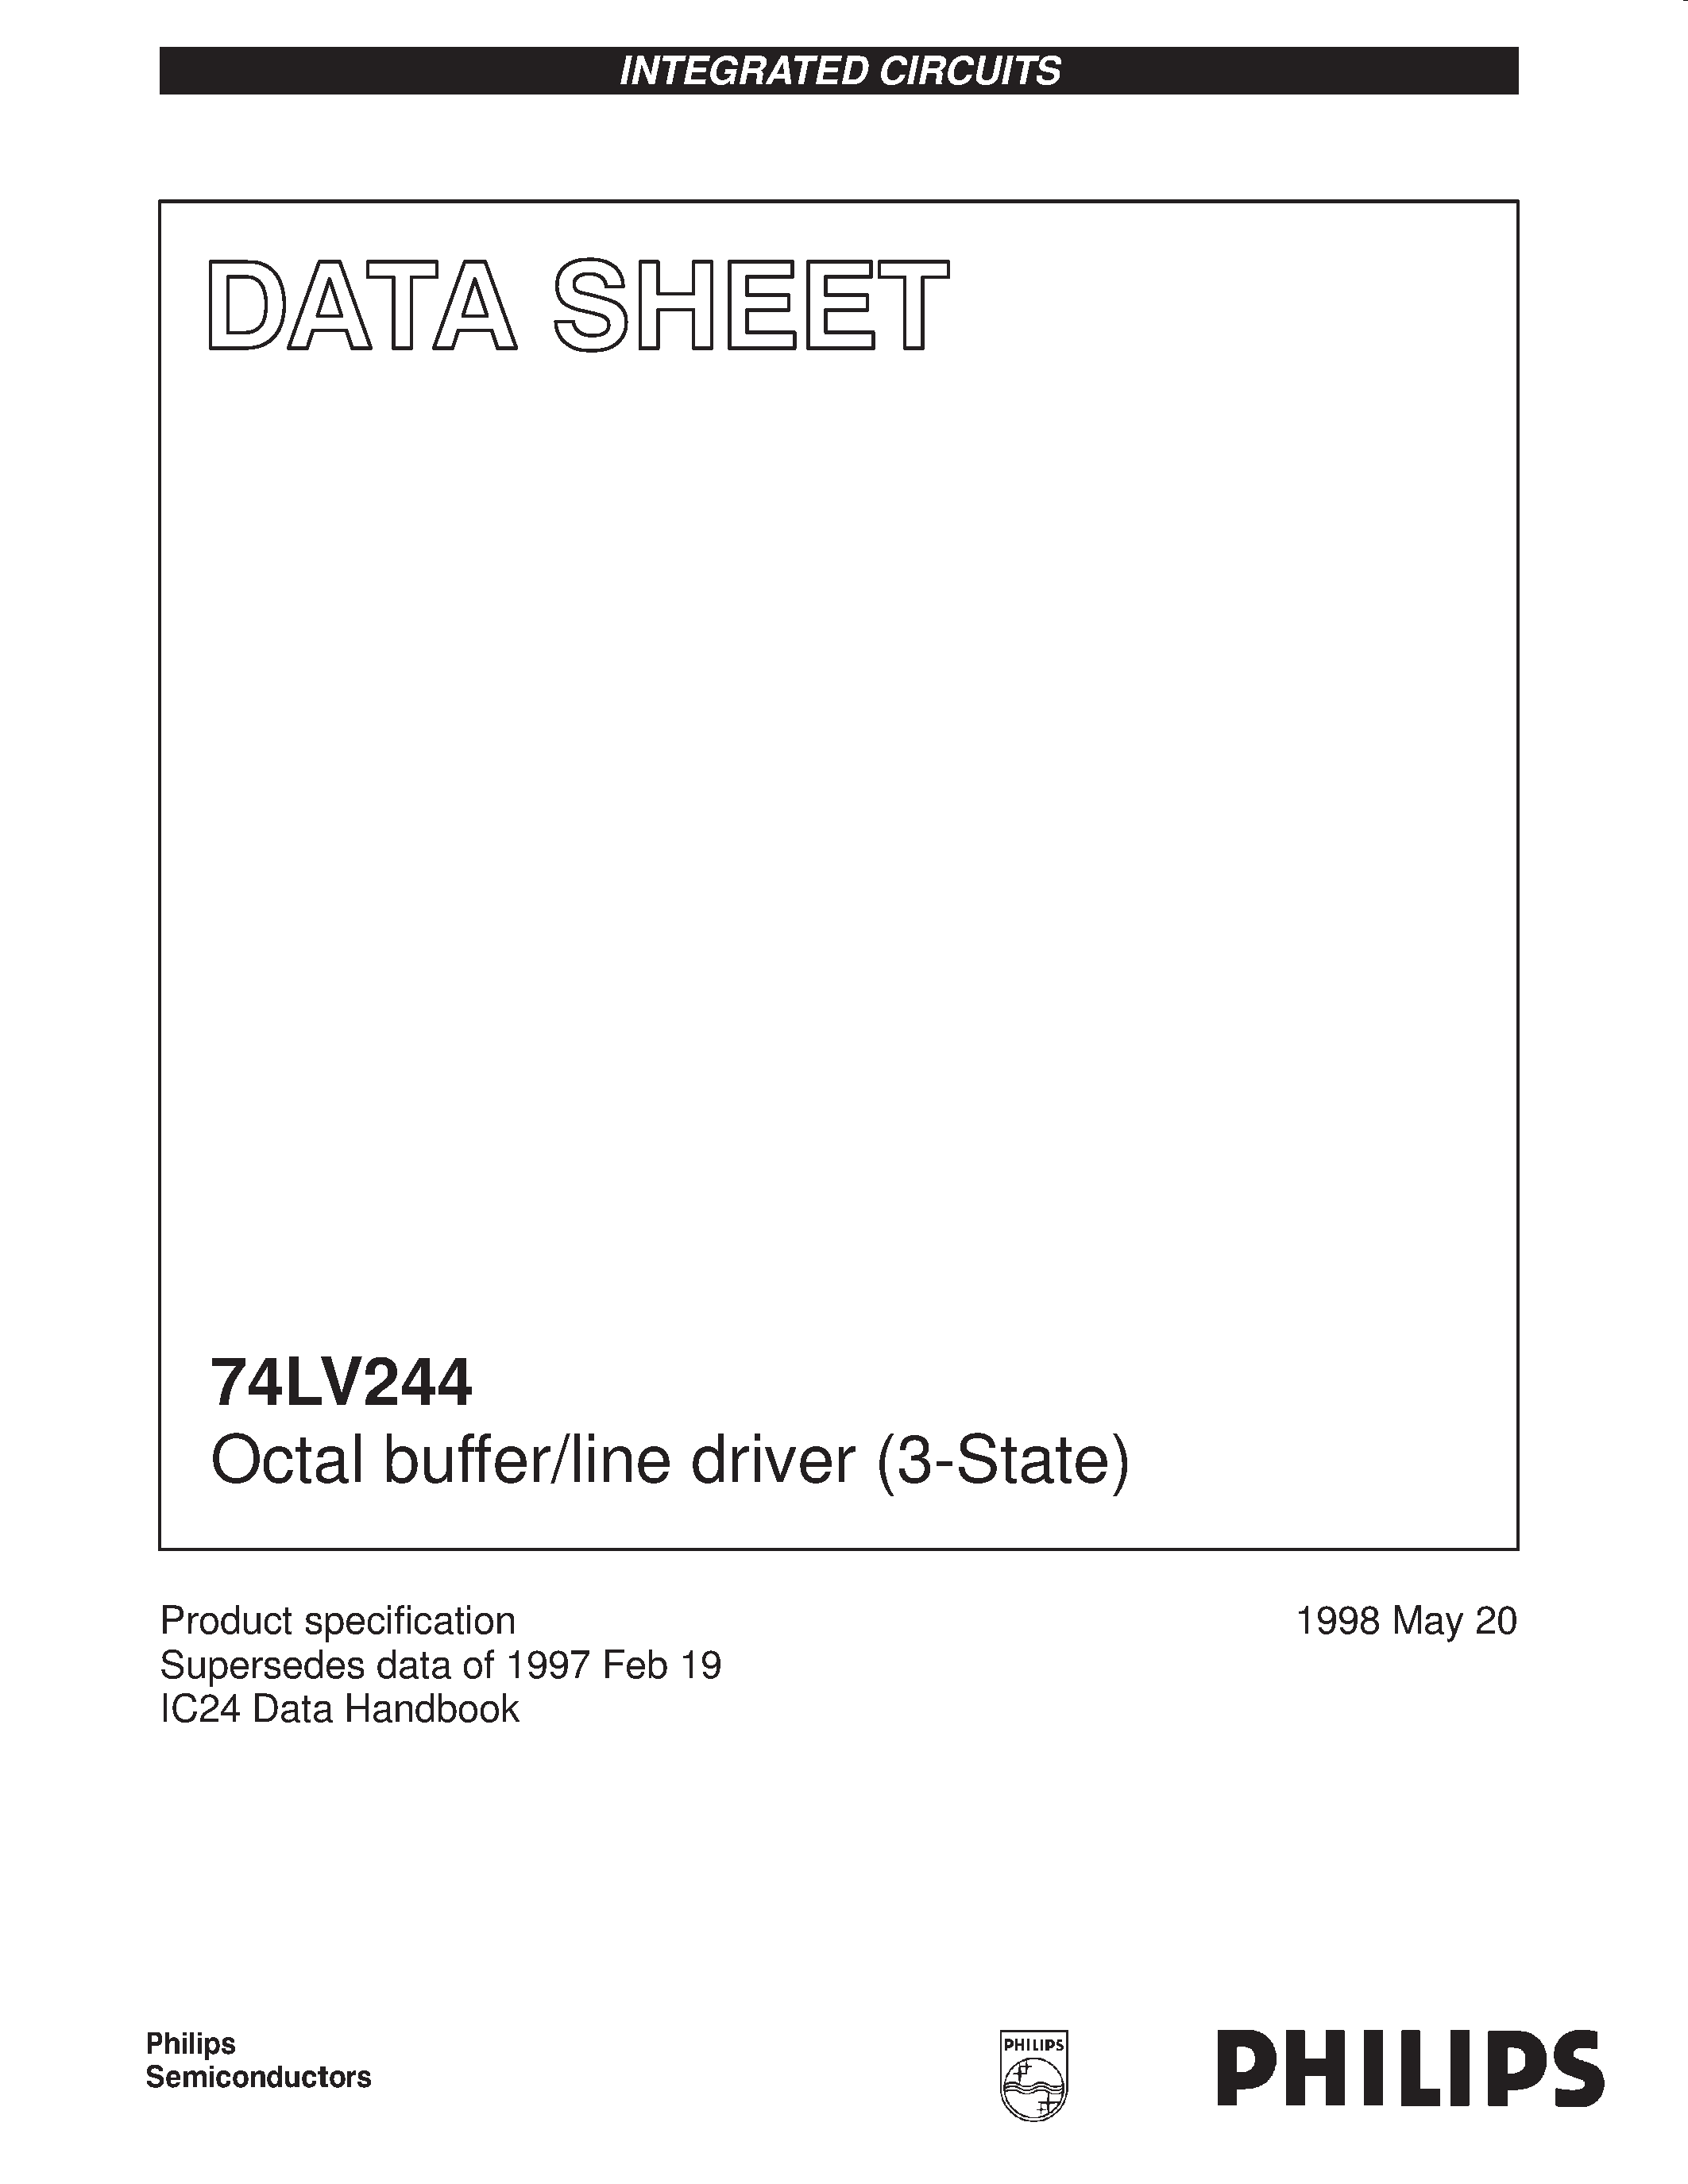 Даташит 74LV244 - Octal buffer/line driver 3-State страница 1